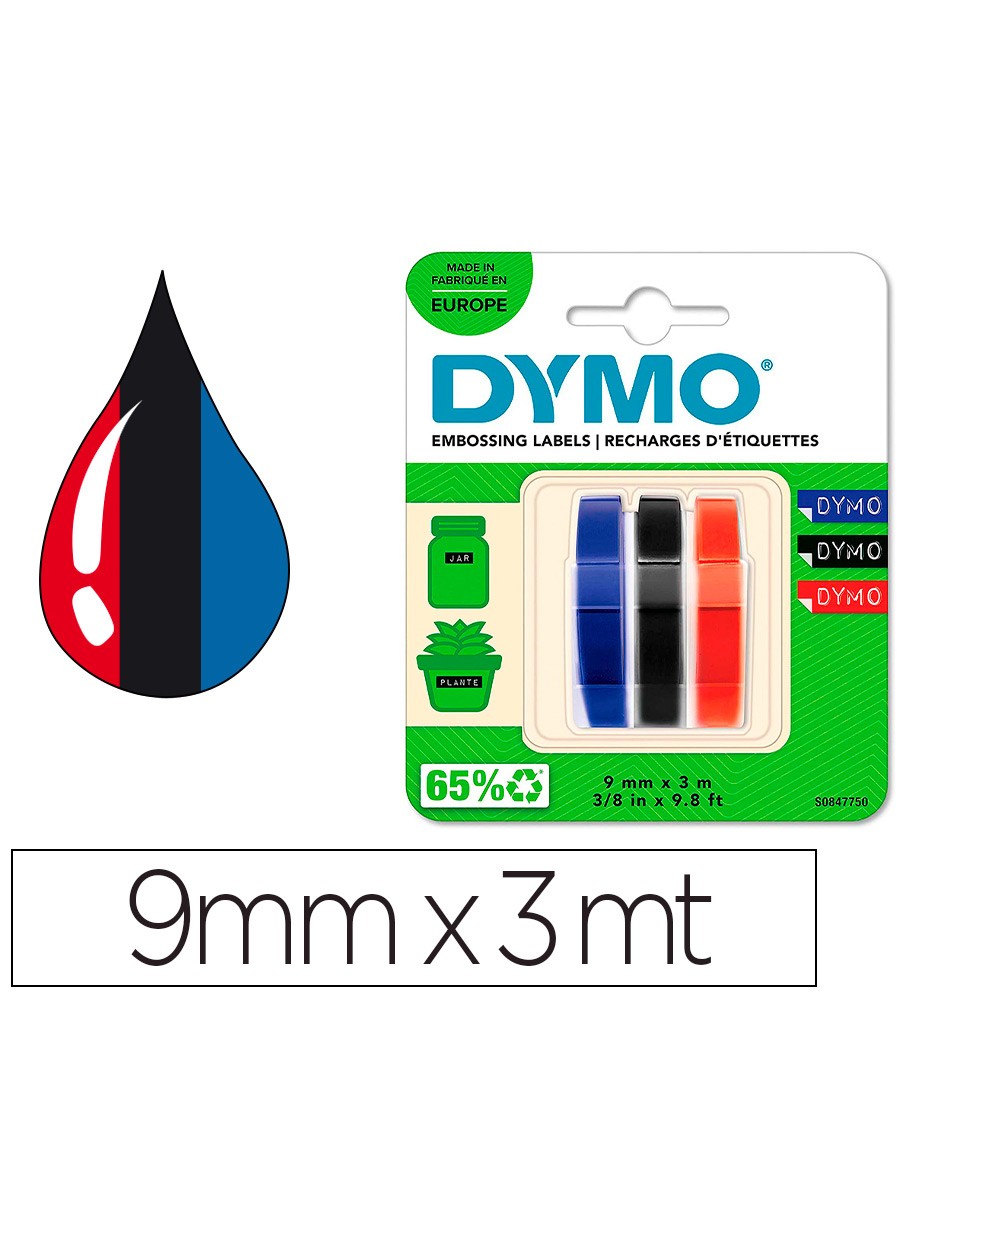 Cinta dymo 3d 9mm x 3mt para rotuladora omega junior color azul negro rojo blister 3 unidades